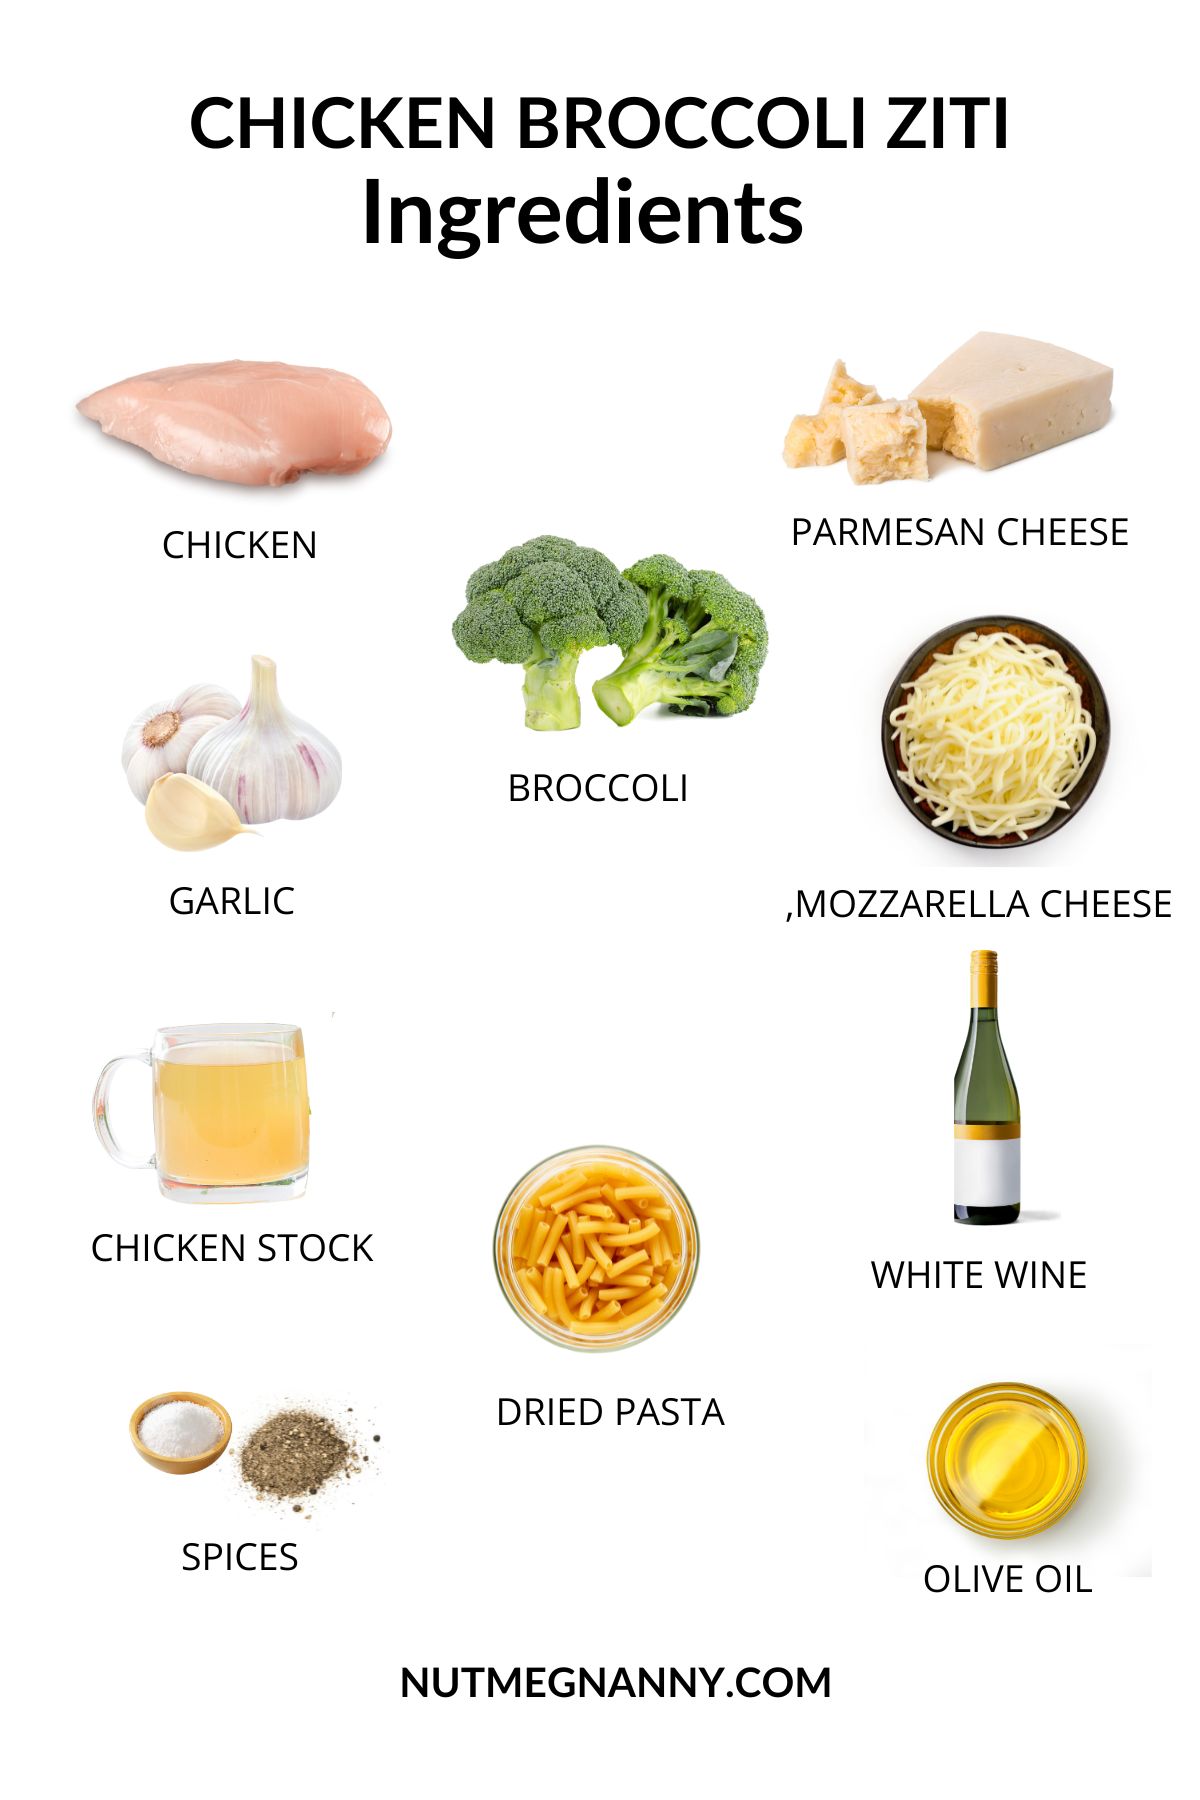 Chicken Broccoli Ziti ingredients poster. 